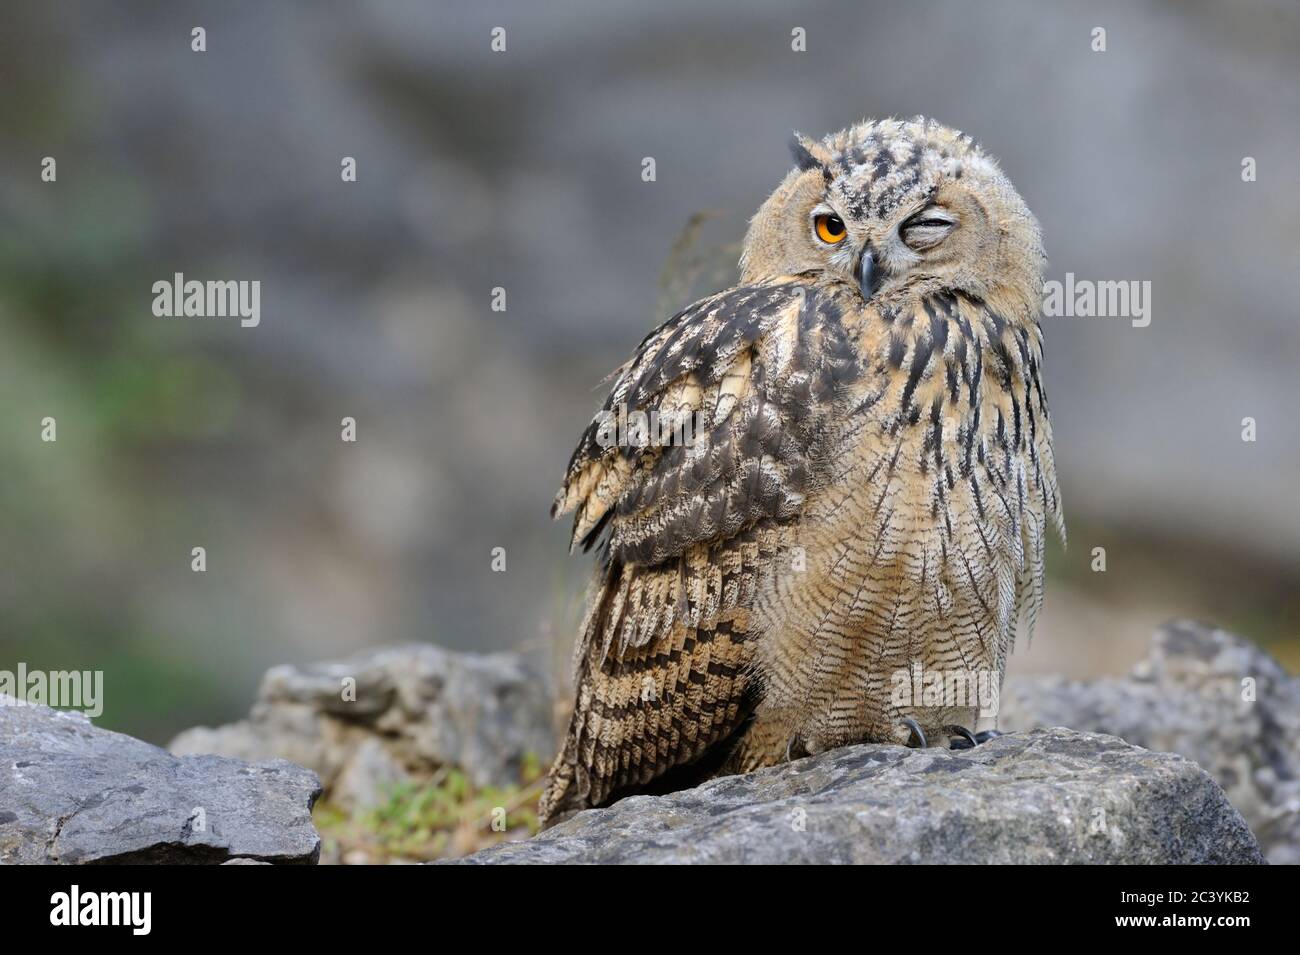 Búho de águila euroasiática ( bubo bubo ), búho joven, encaramado en una roca, ojo parpadeante, vista frontal, se ve divertido, humor, vida silvestre, Europa. Foto de stock